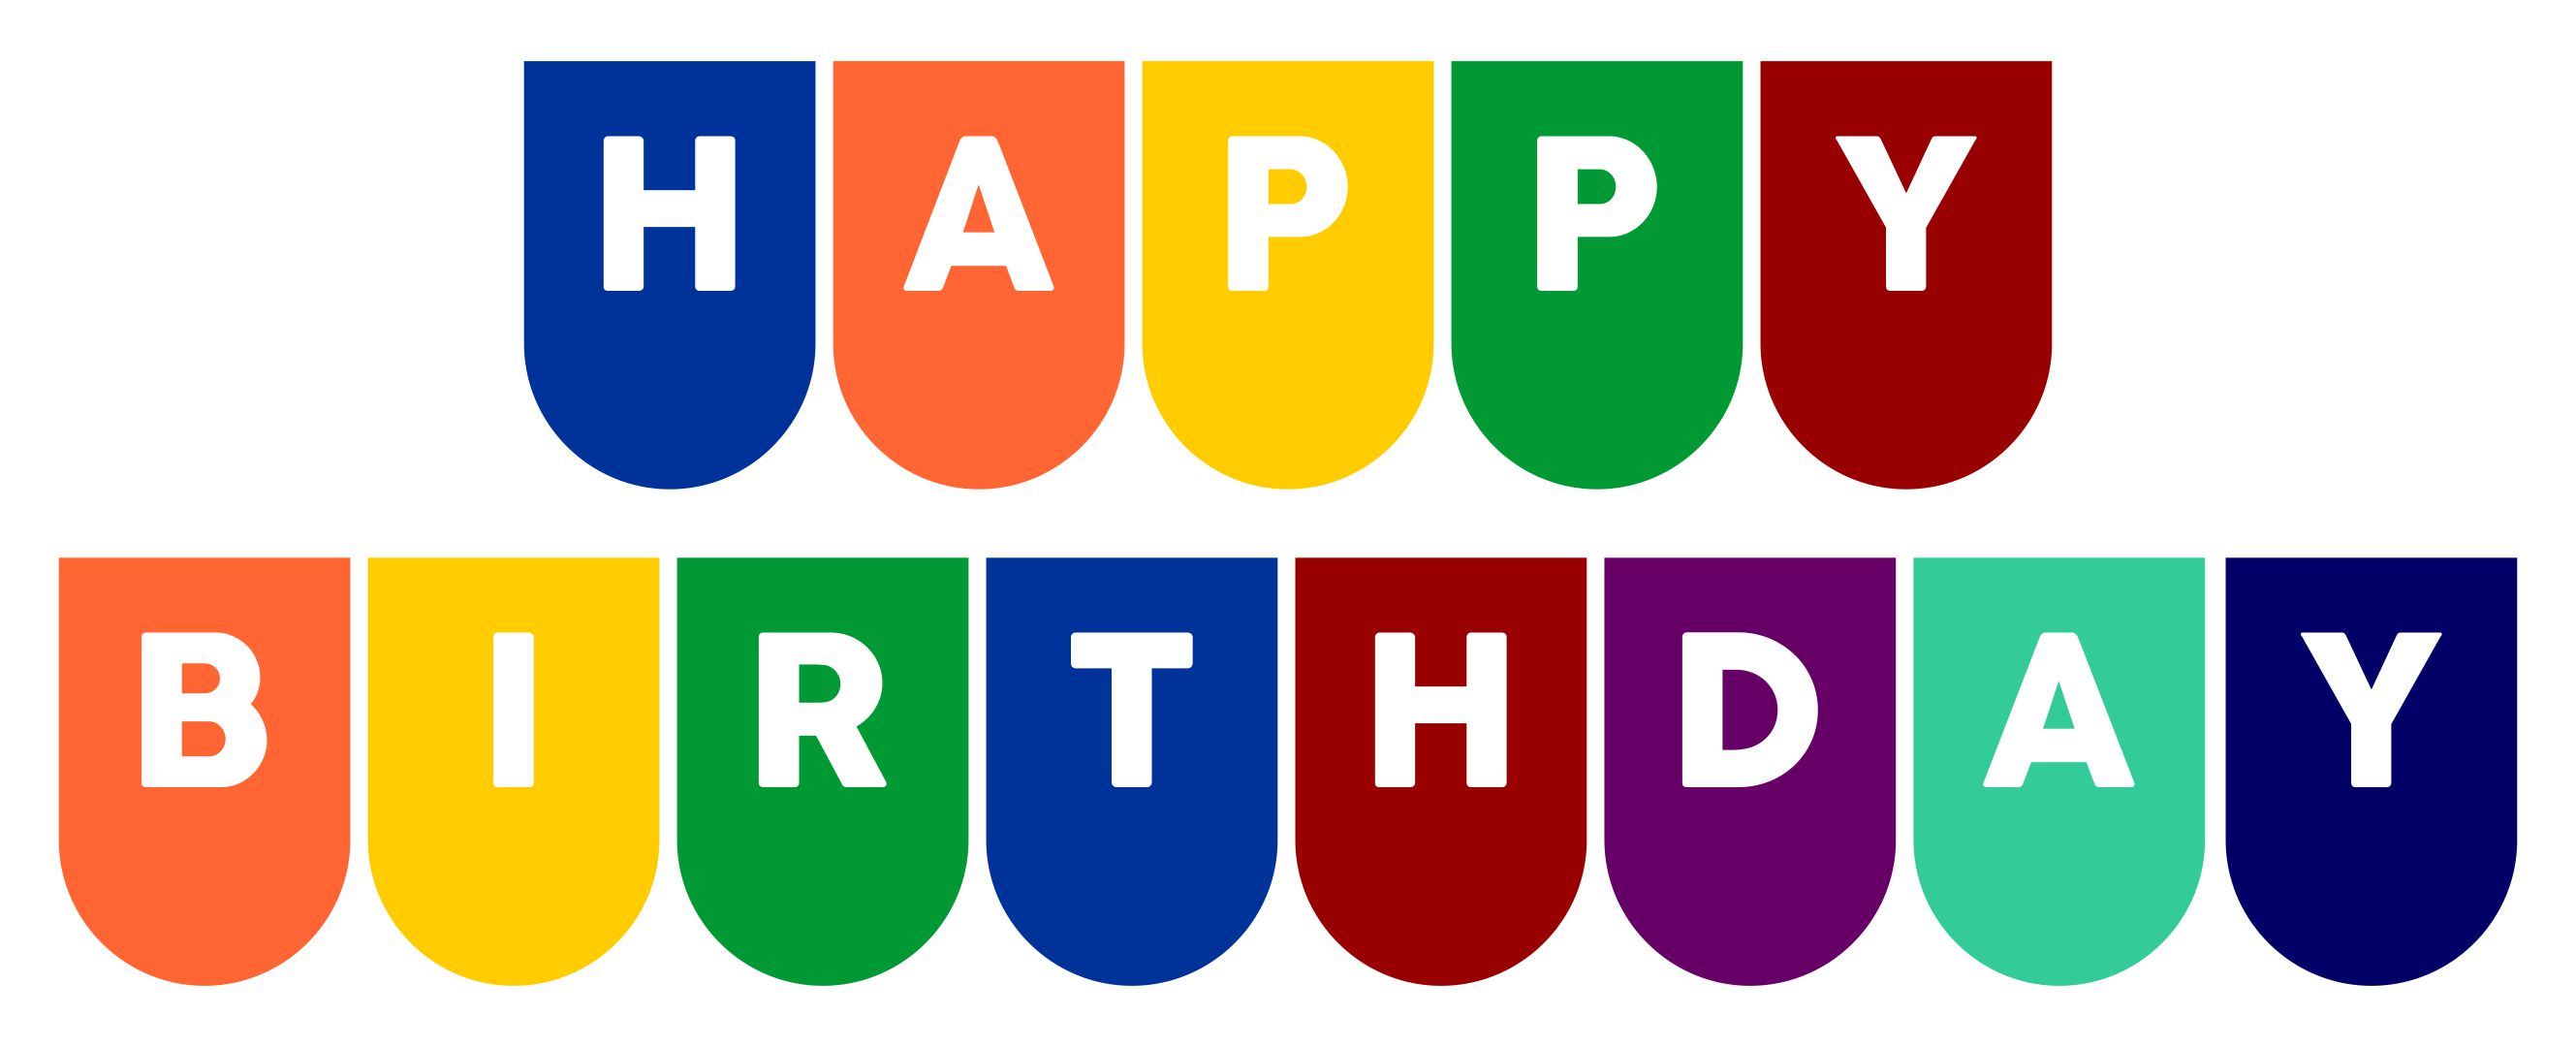 6 Best Images of Happy Birthday Printable Banners Signs Free Printable Happy Birthday Banner